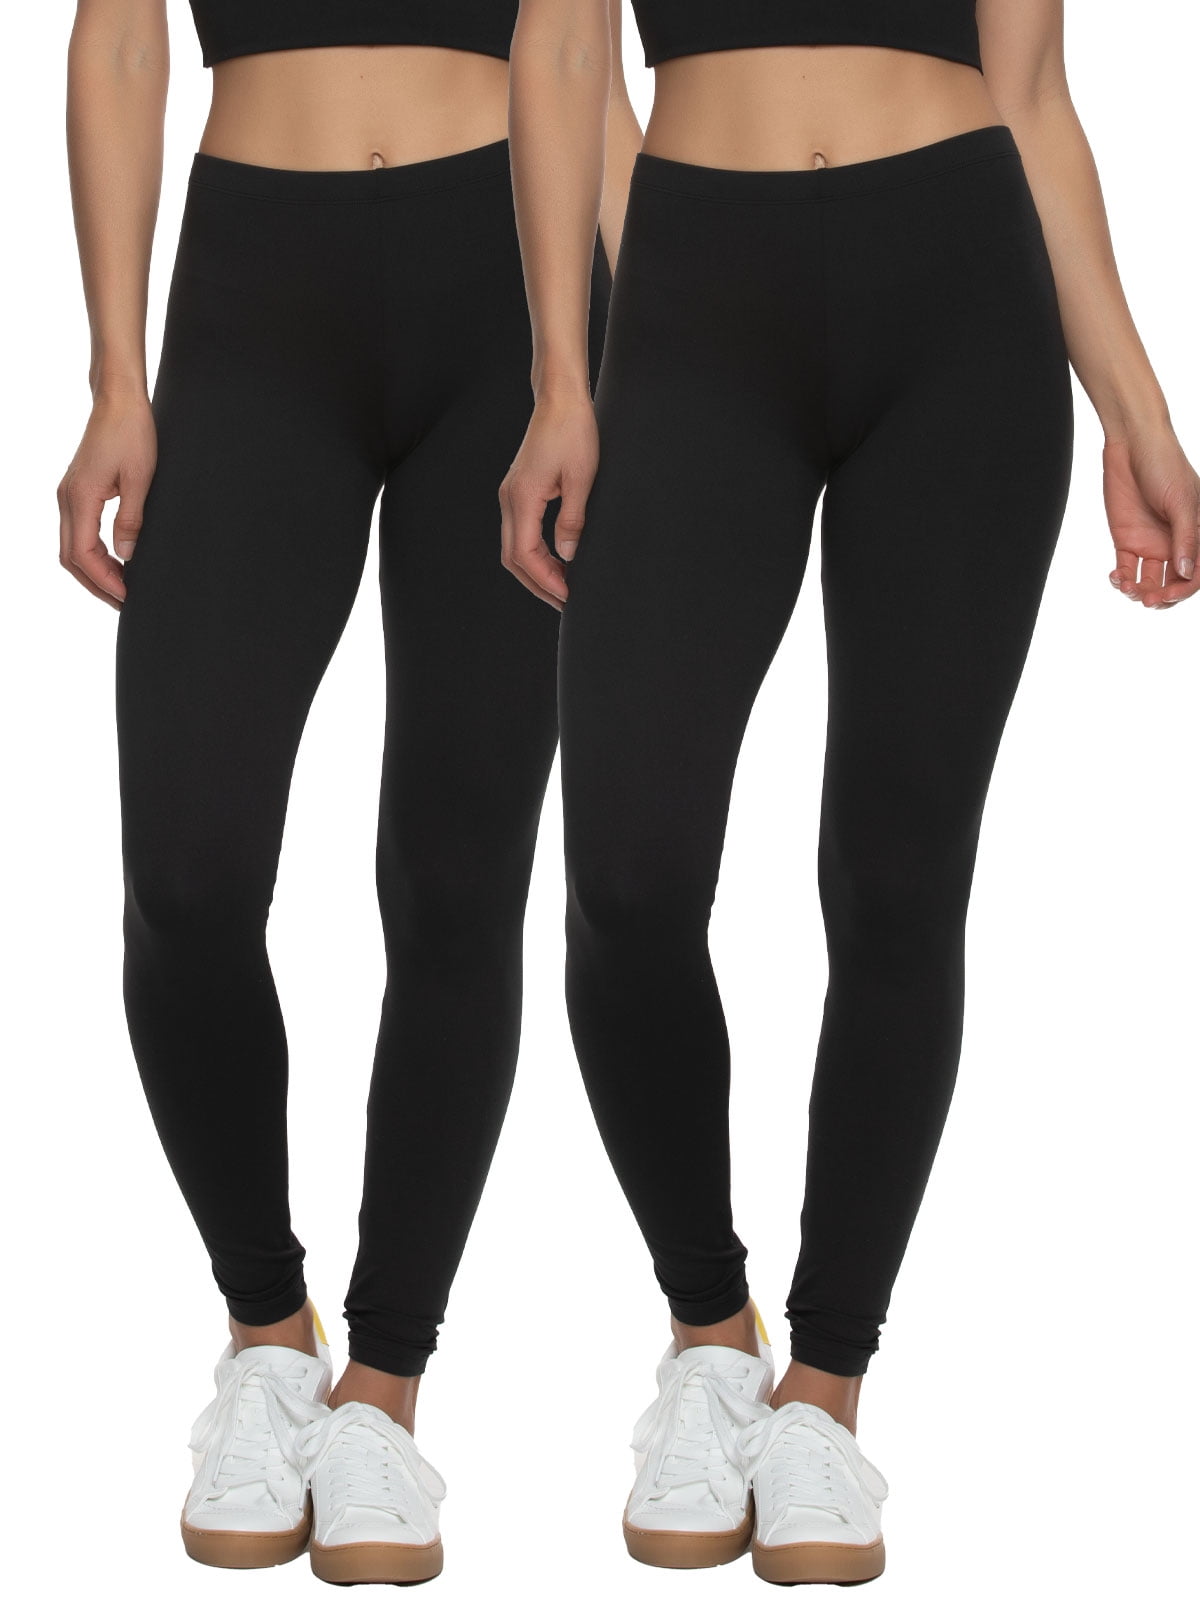 Felina Velvety Super Soft Lightweight Leggings 2-Pack - For Women - Yoga  Pants, Workout Clothes (Black, Small) 